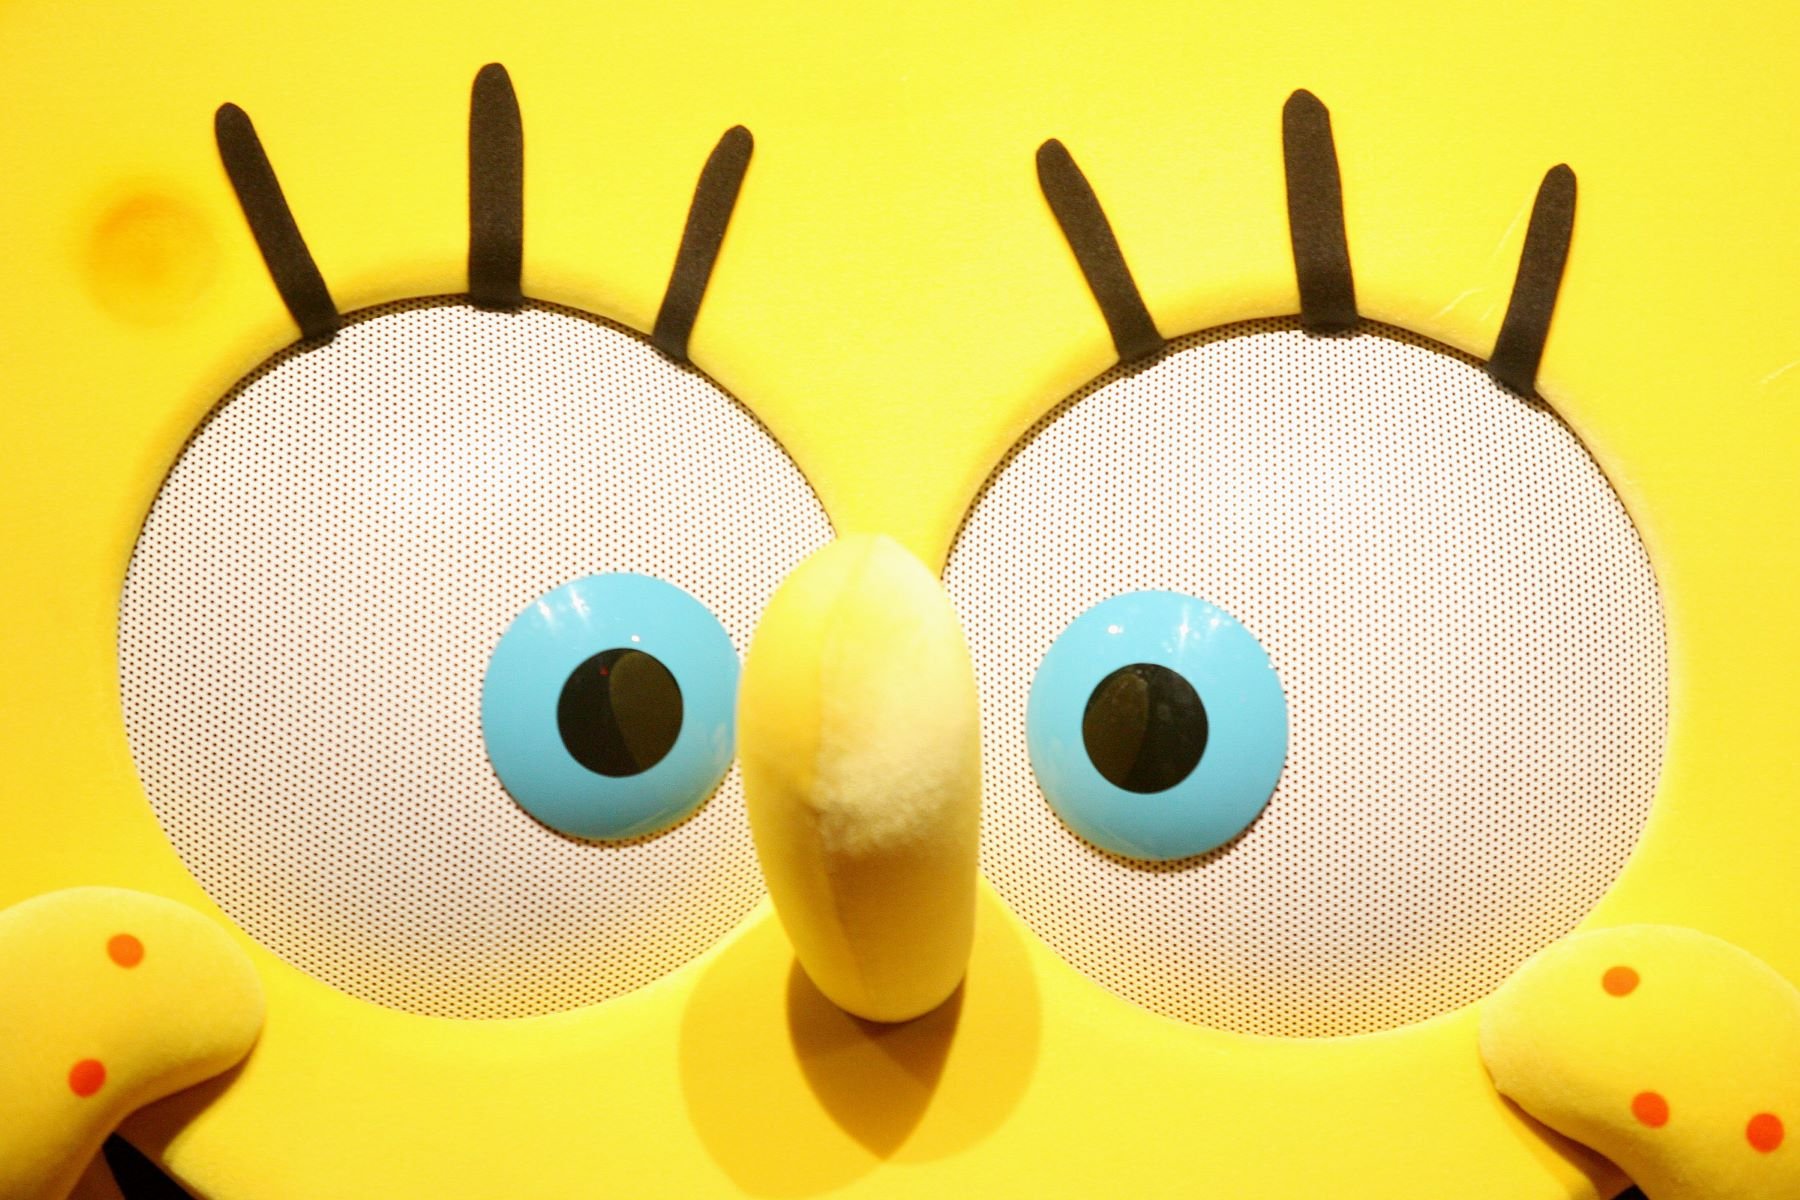 Why These 'Spongebob Squarepants' Episodes Aren't on Paramount+